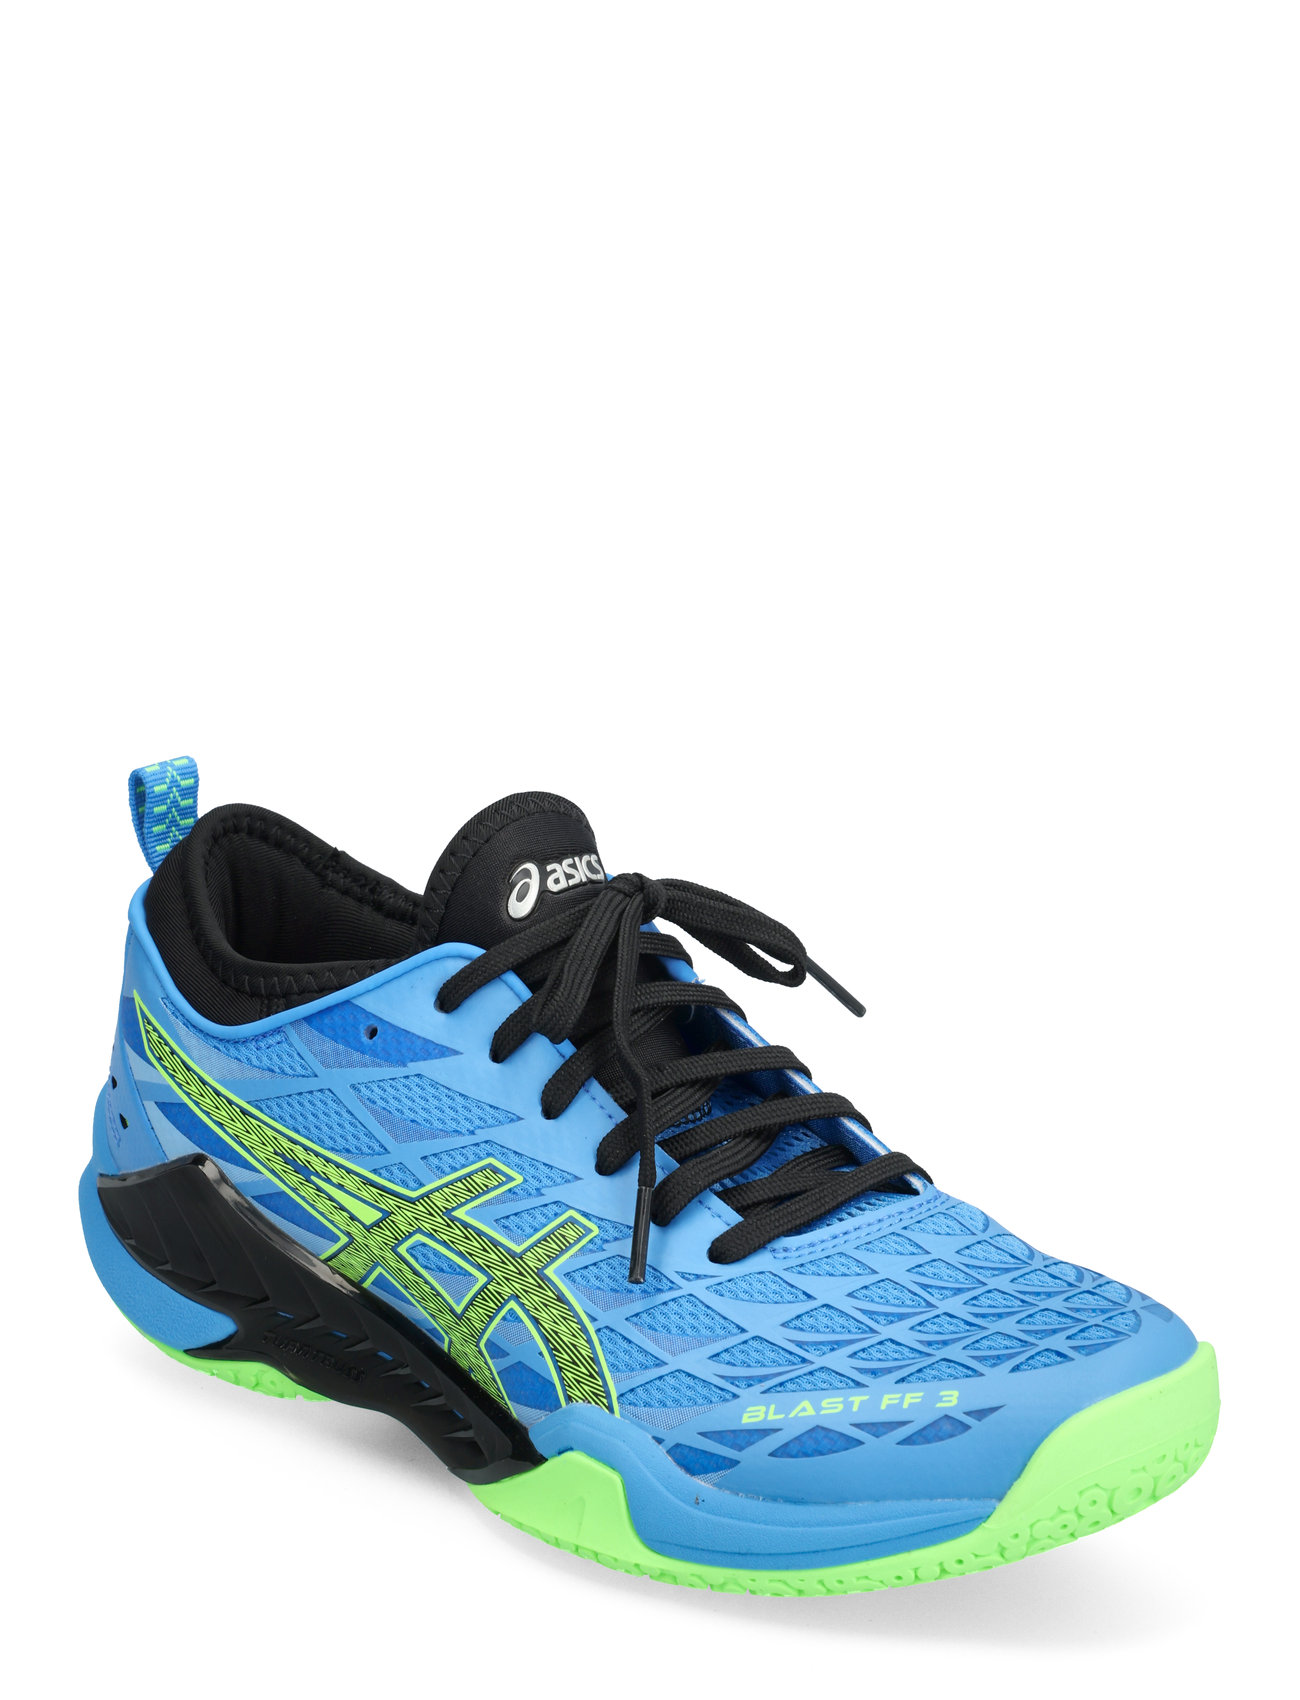 Asics "Blast Ff 3 Sport Shoes Training Shoes- Golf-tennis-fitness Blue Asics"